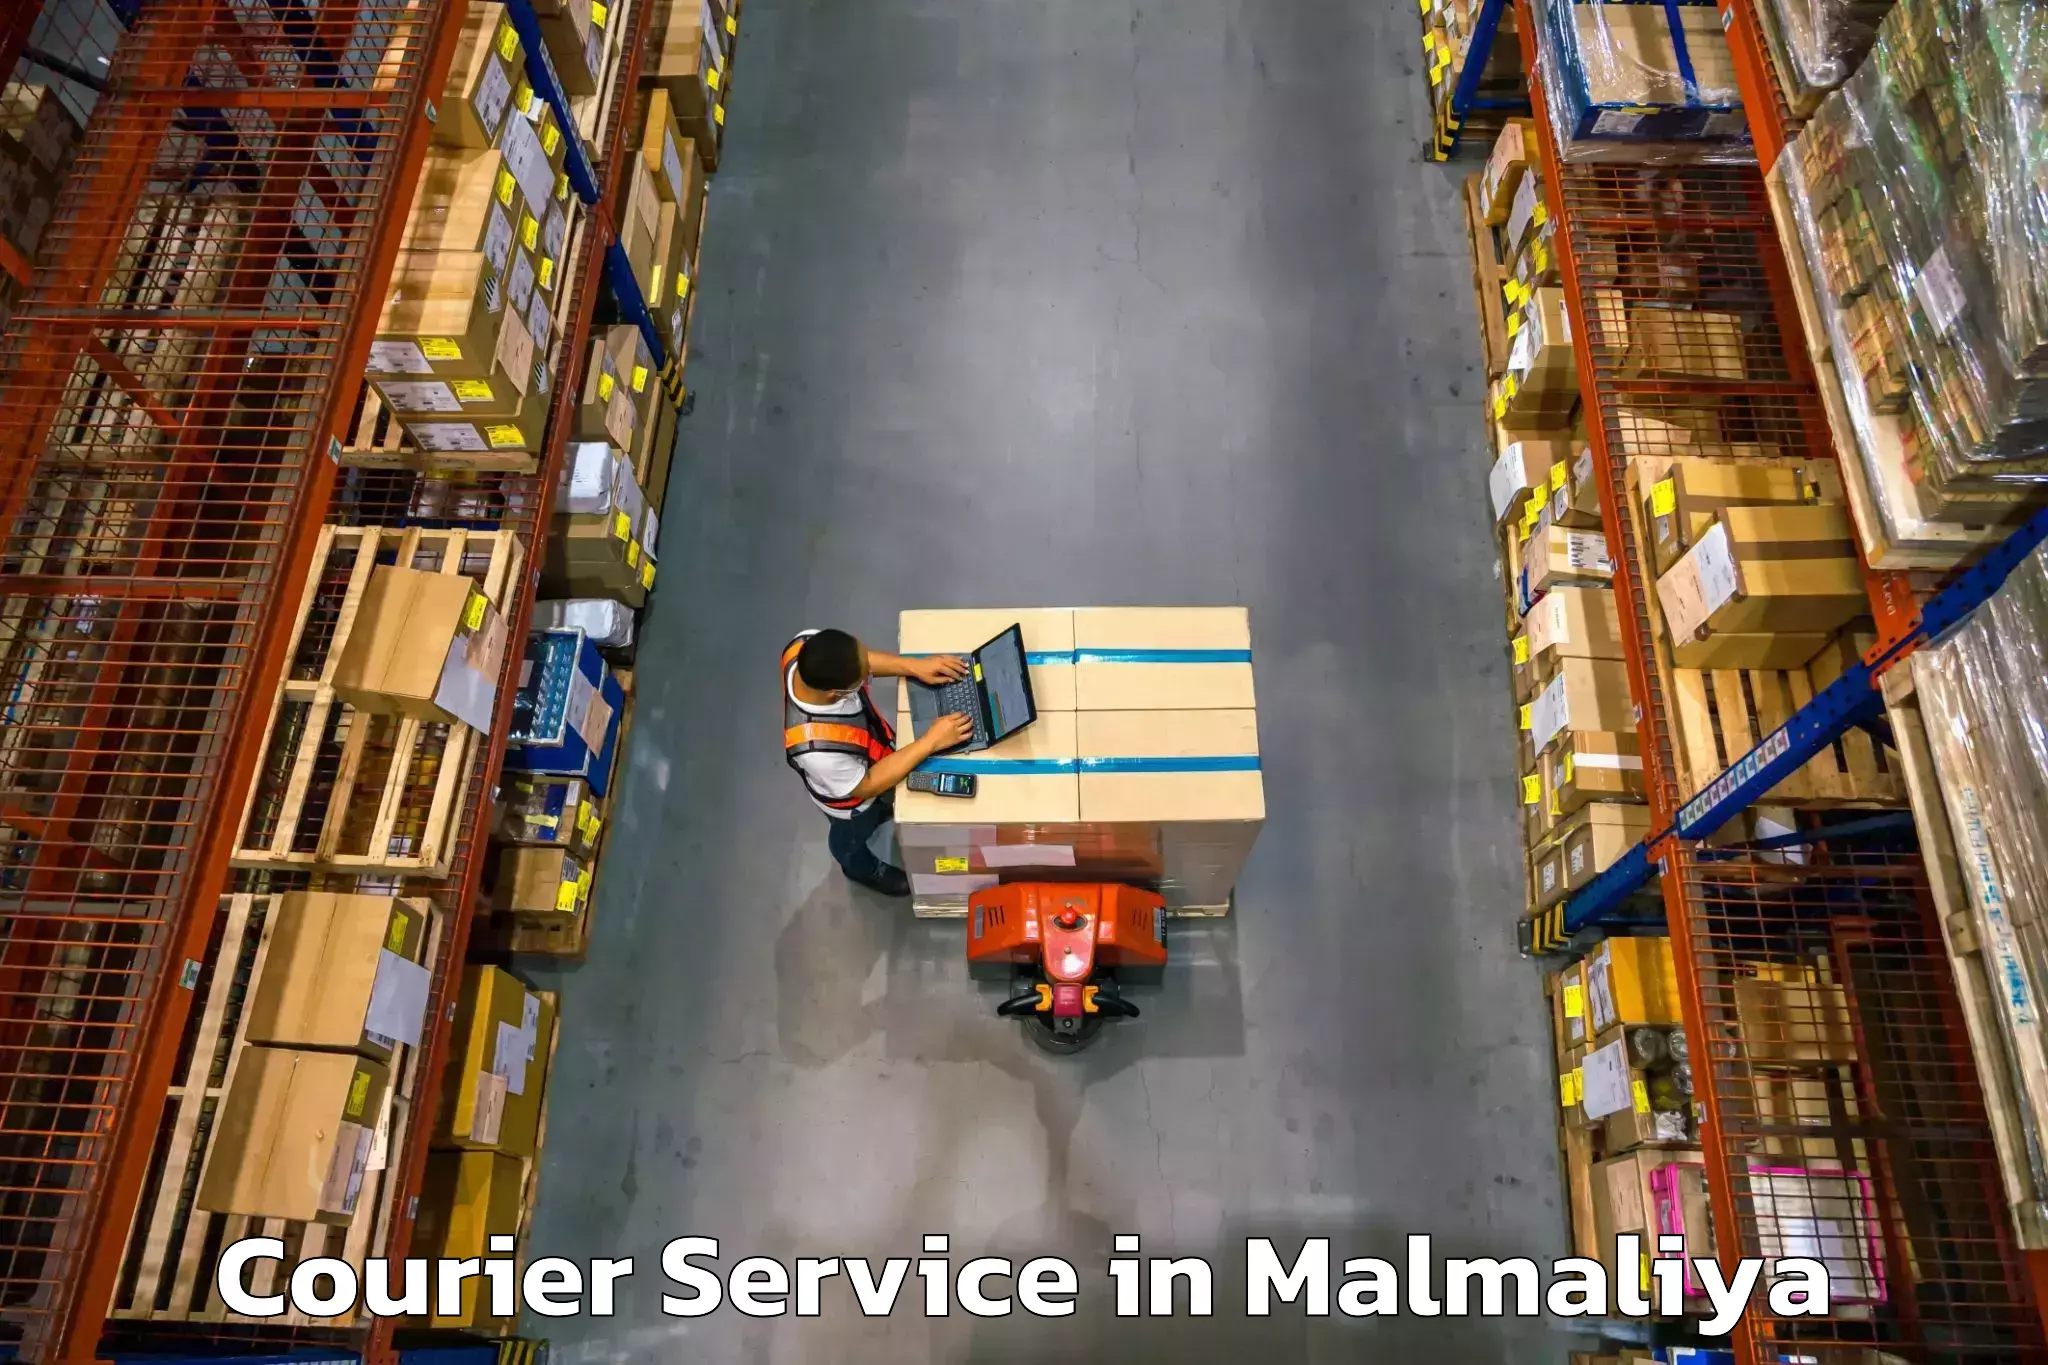 Next-day delivery options in Malmaliya